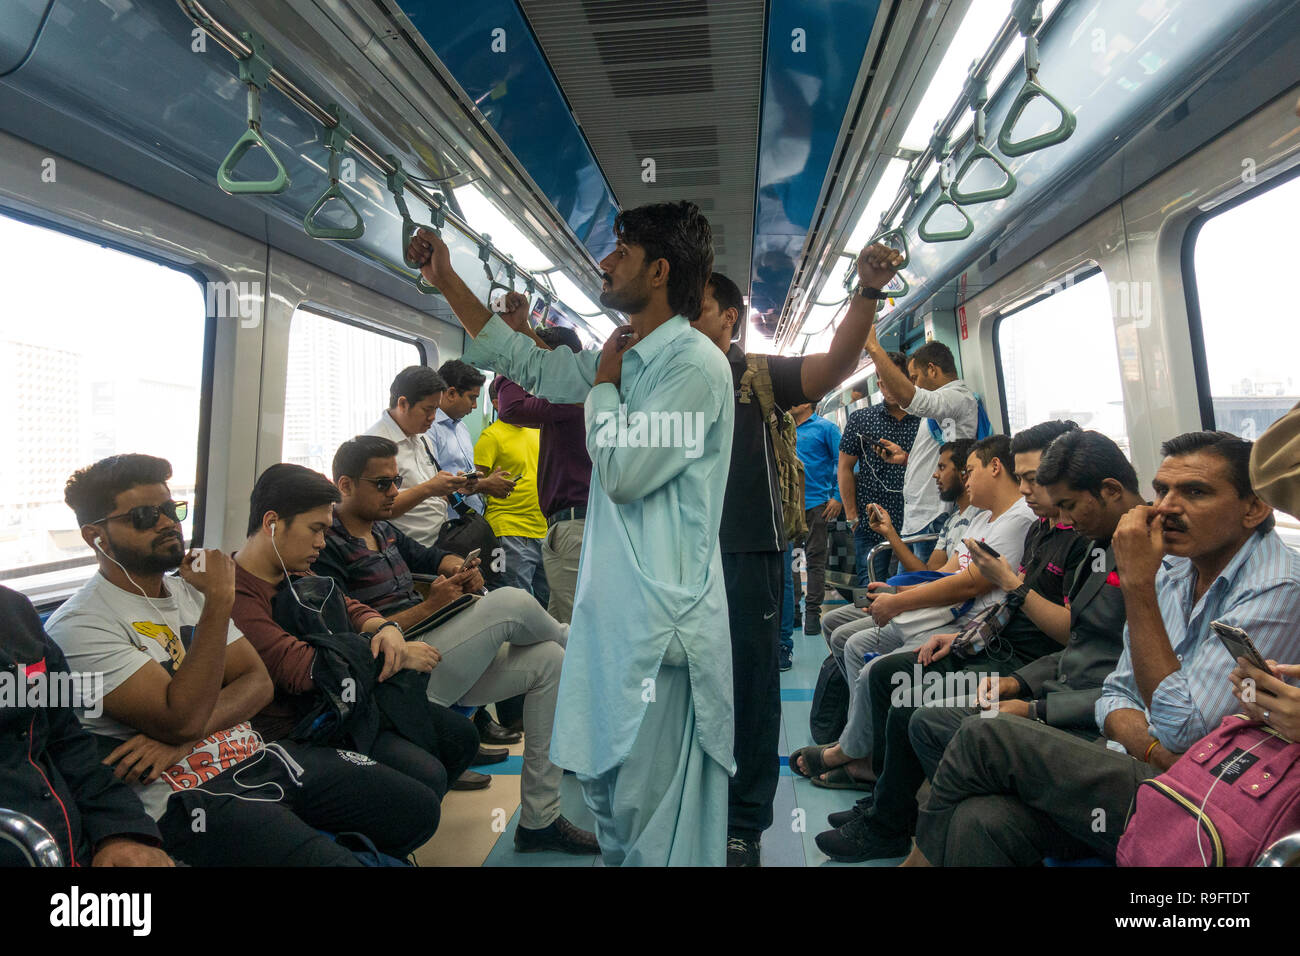 Passengers inside carriage on the Dubai metro, United Arab Emirates Stock Photo